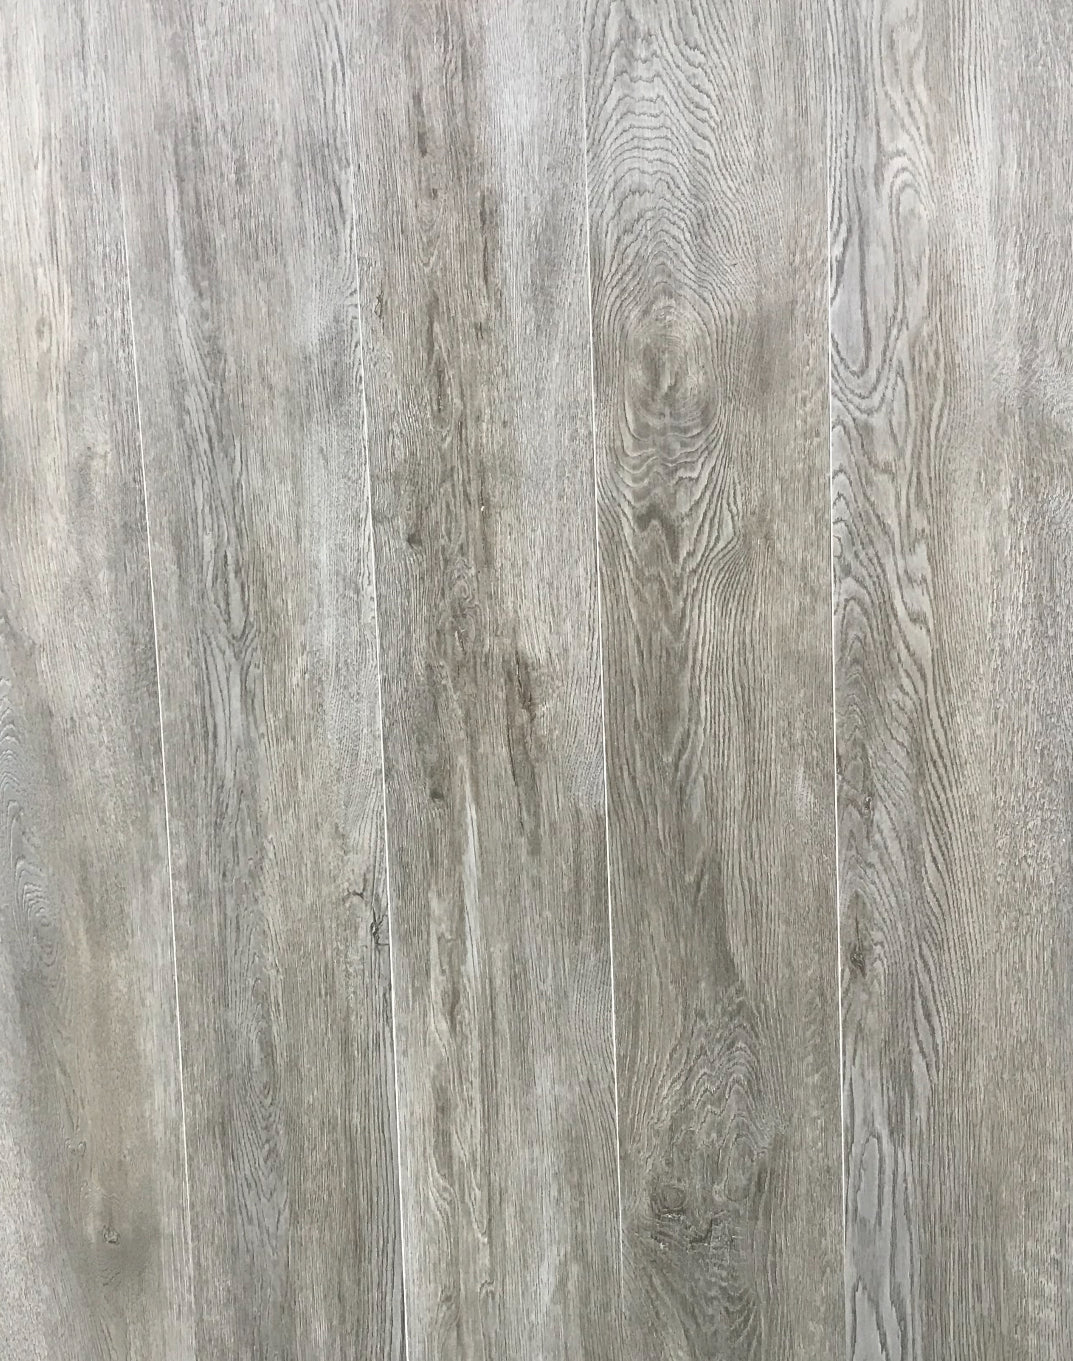 Closeout 12 mil Luxury Vinyl Plank Flooring - Upscale $1.59/sqft